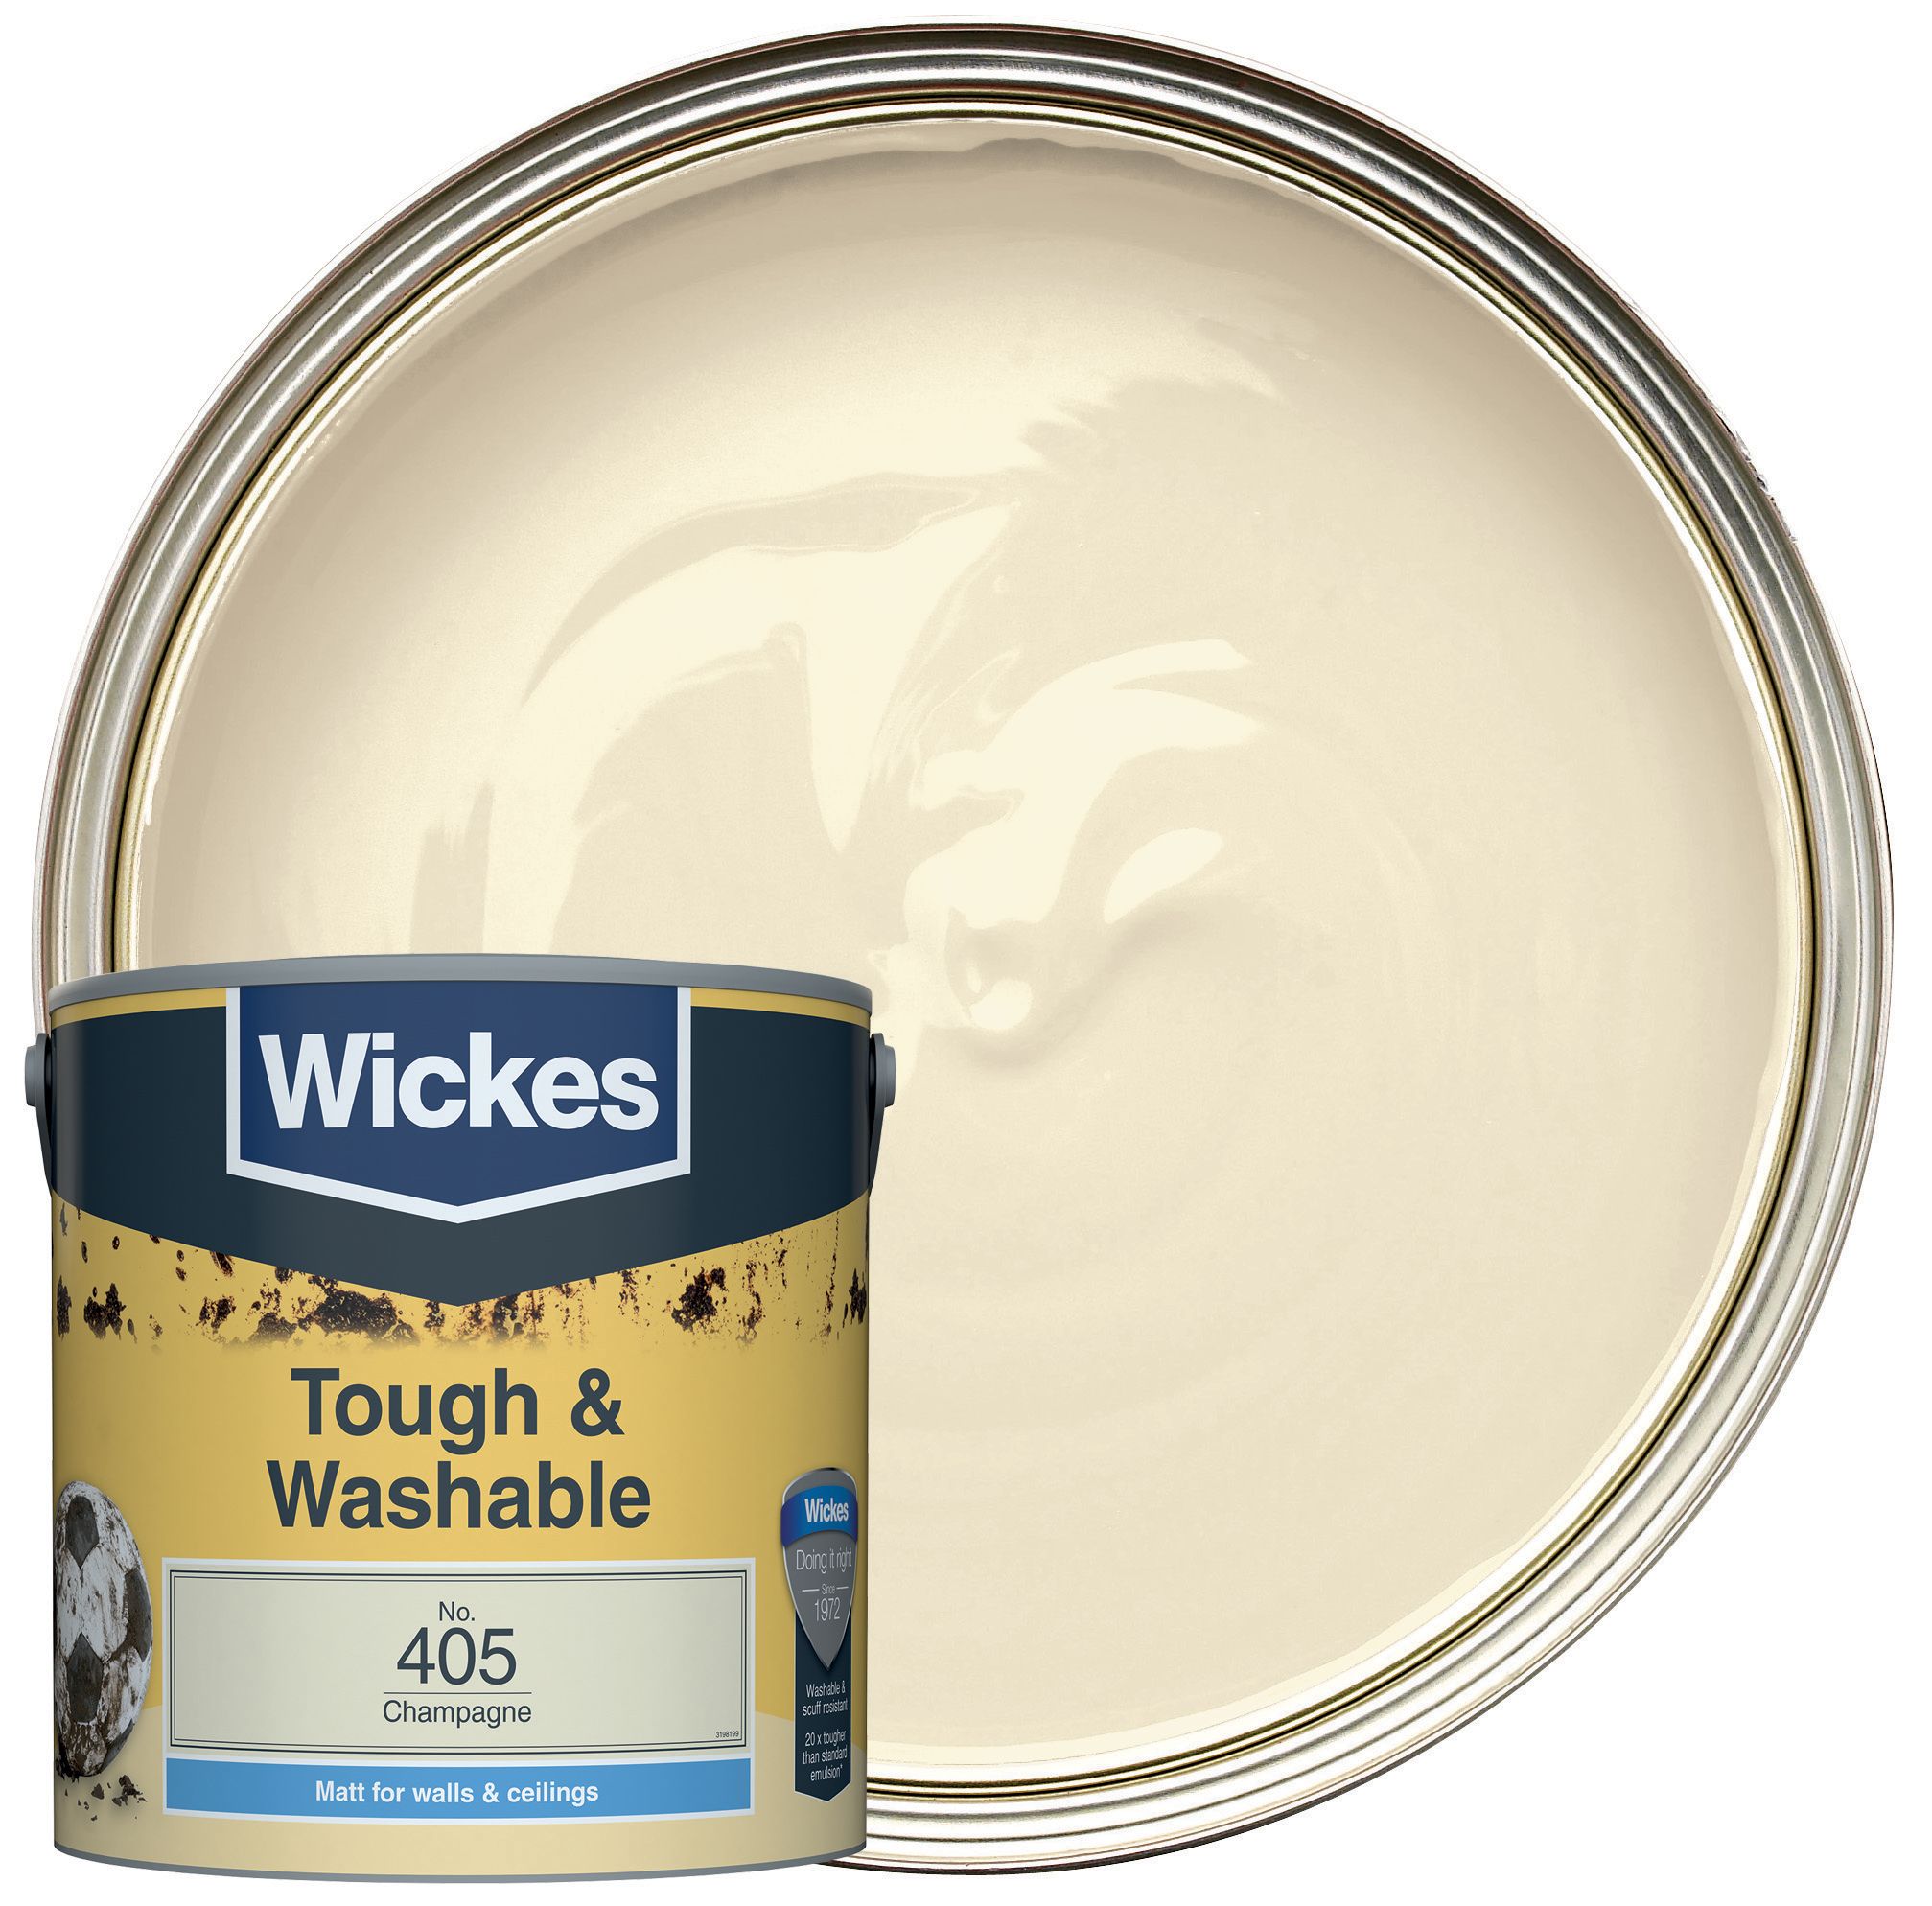 Image of Wickes Tough & Washable Matt Emulsion Paint - Champagne No.405 - 2.5L